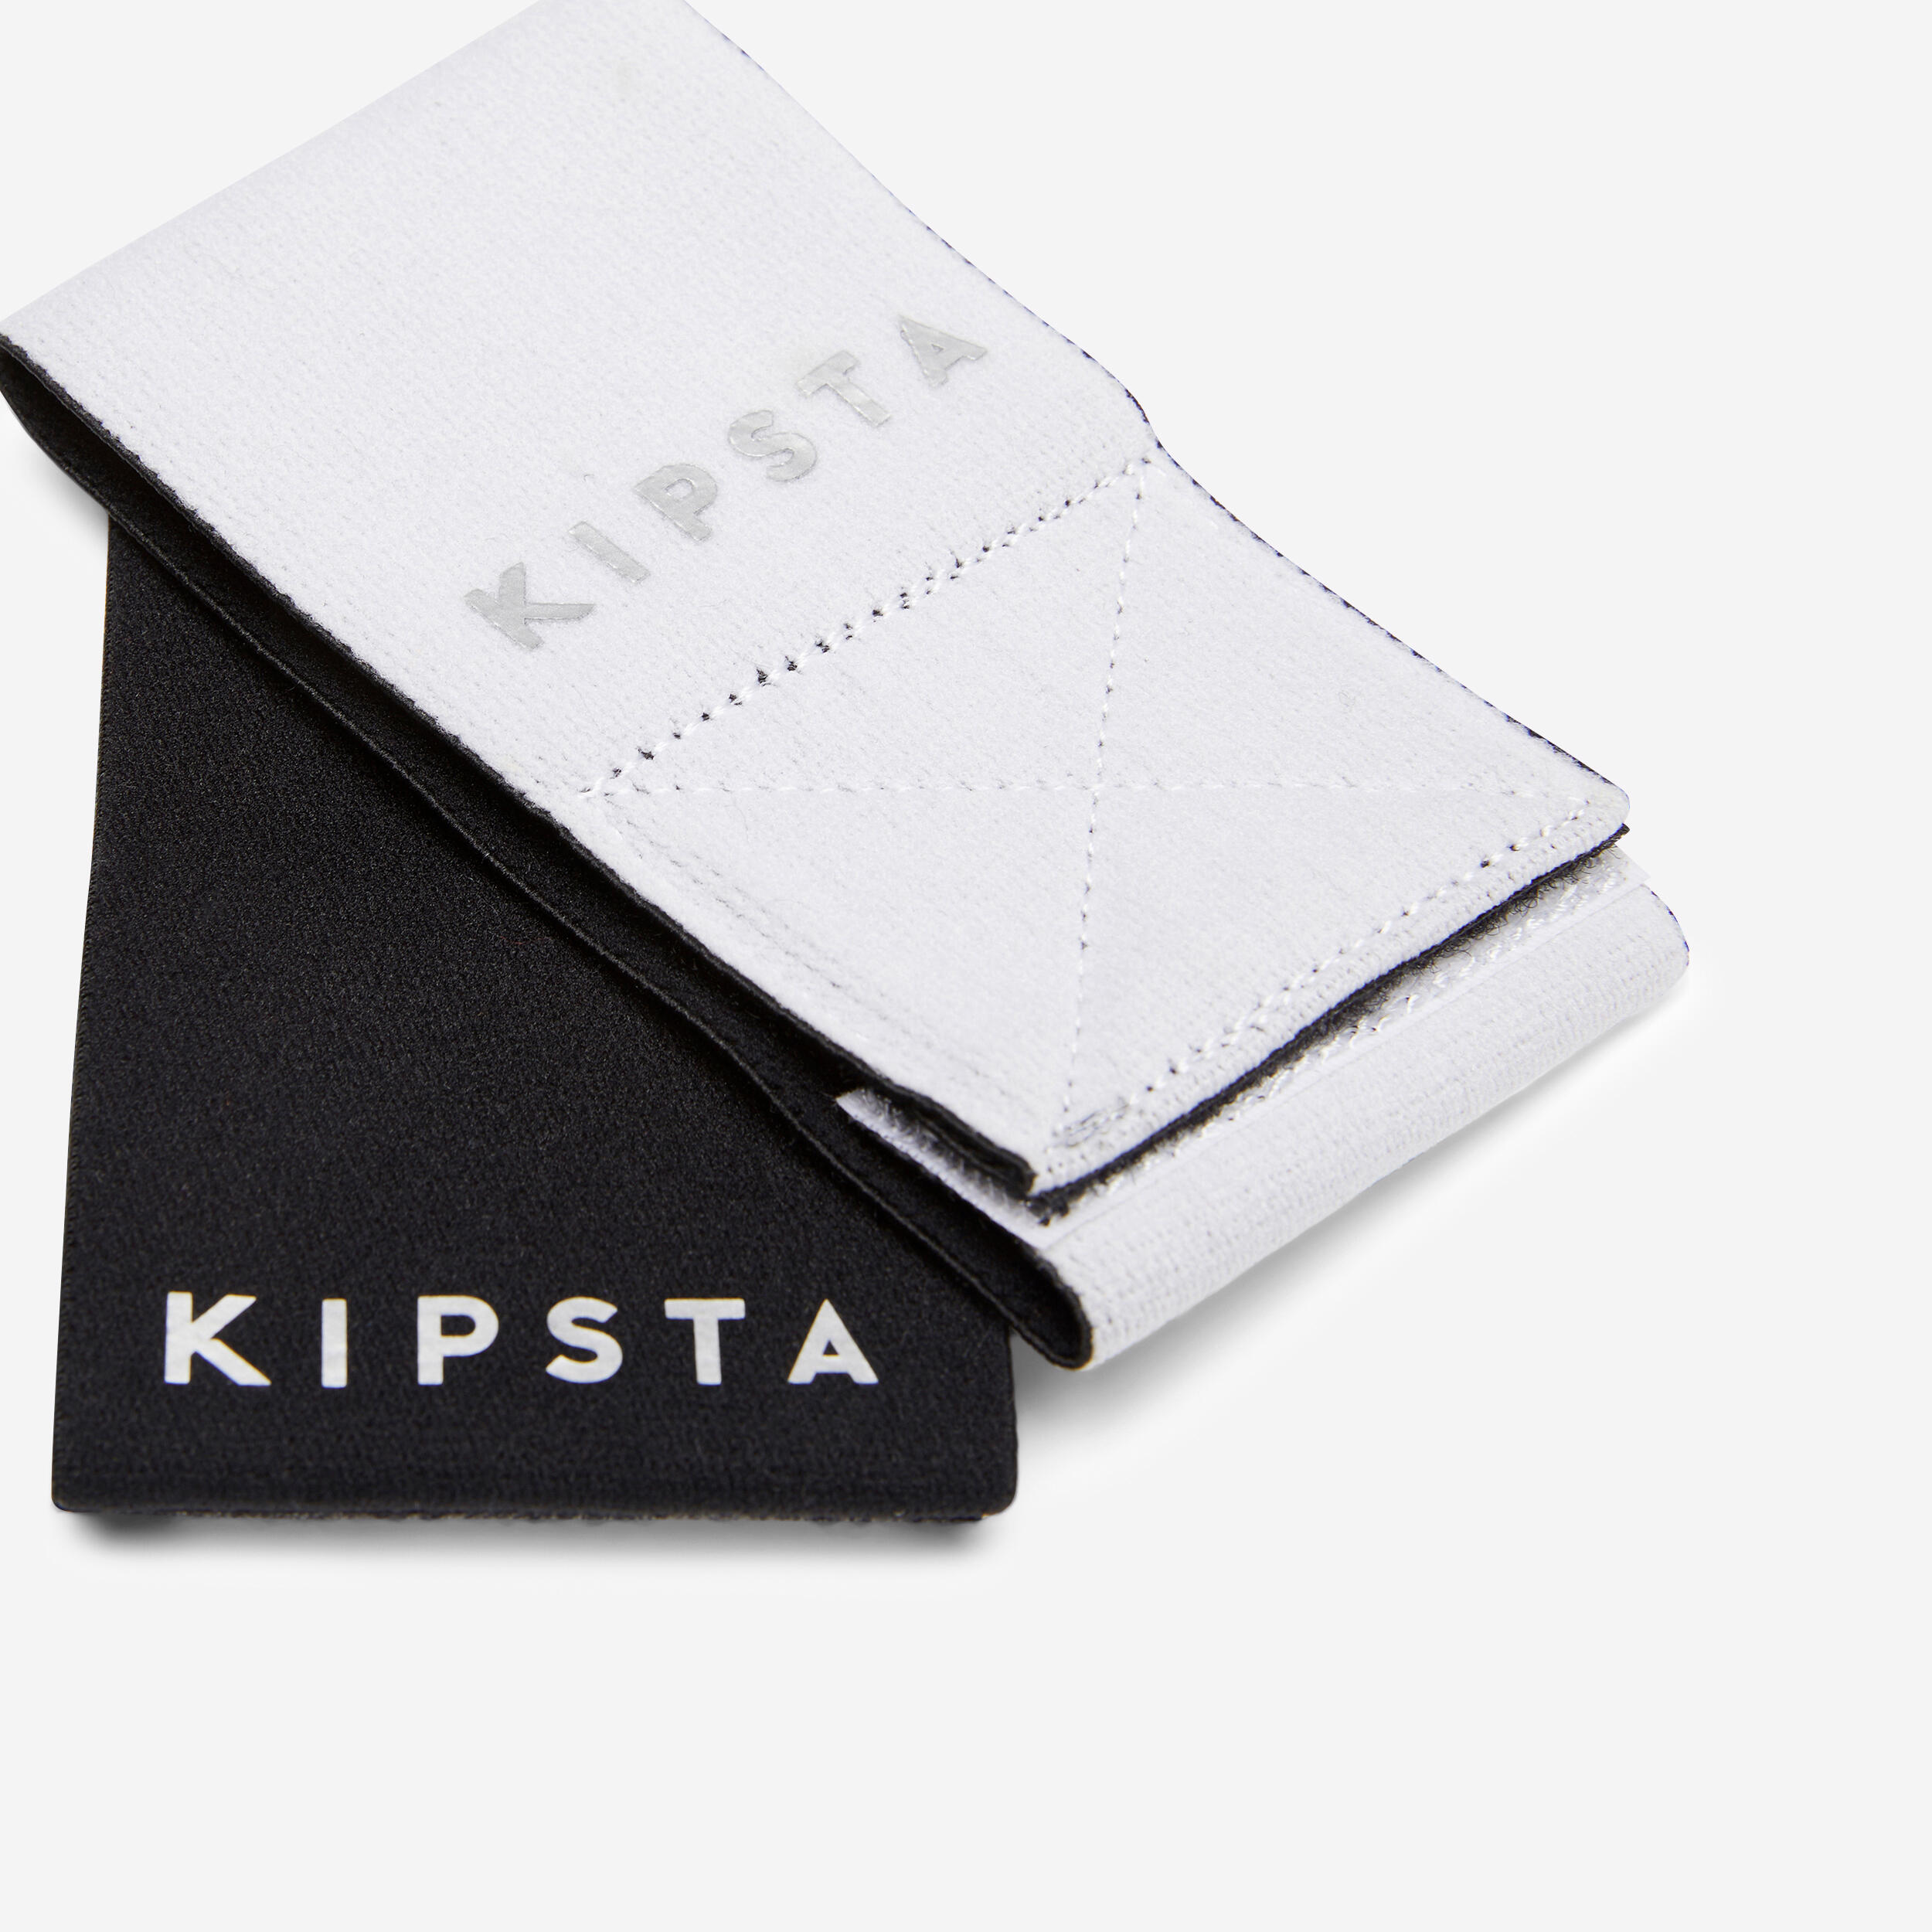 KIPSTA Reversible Support Strap - Black or White